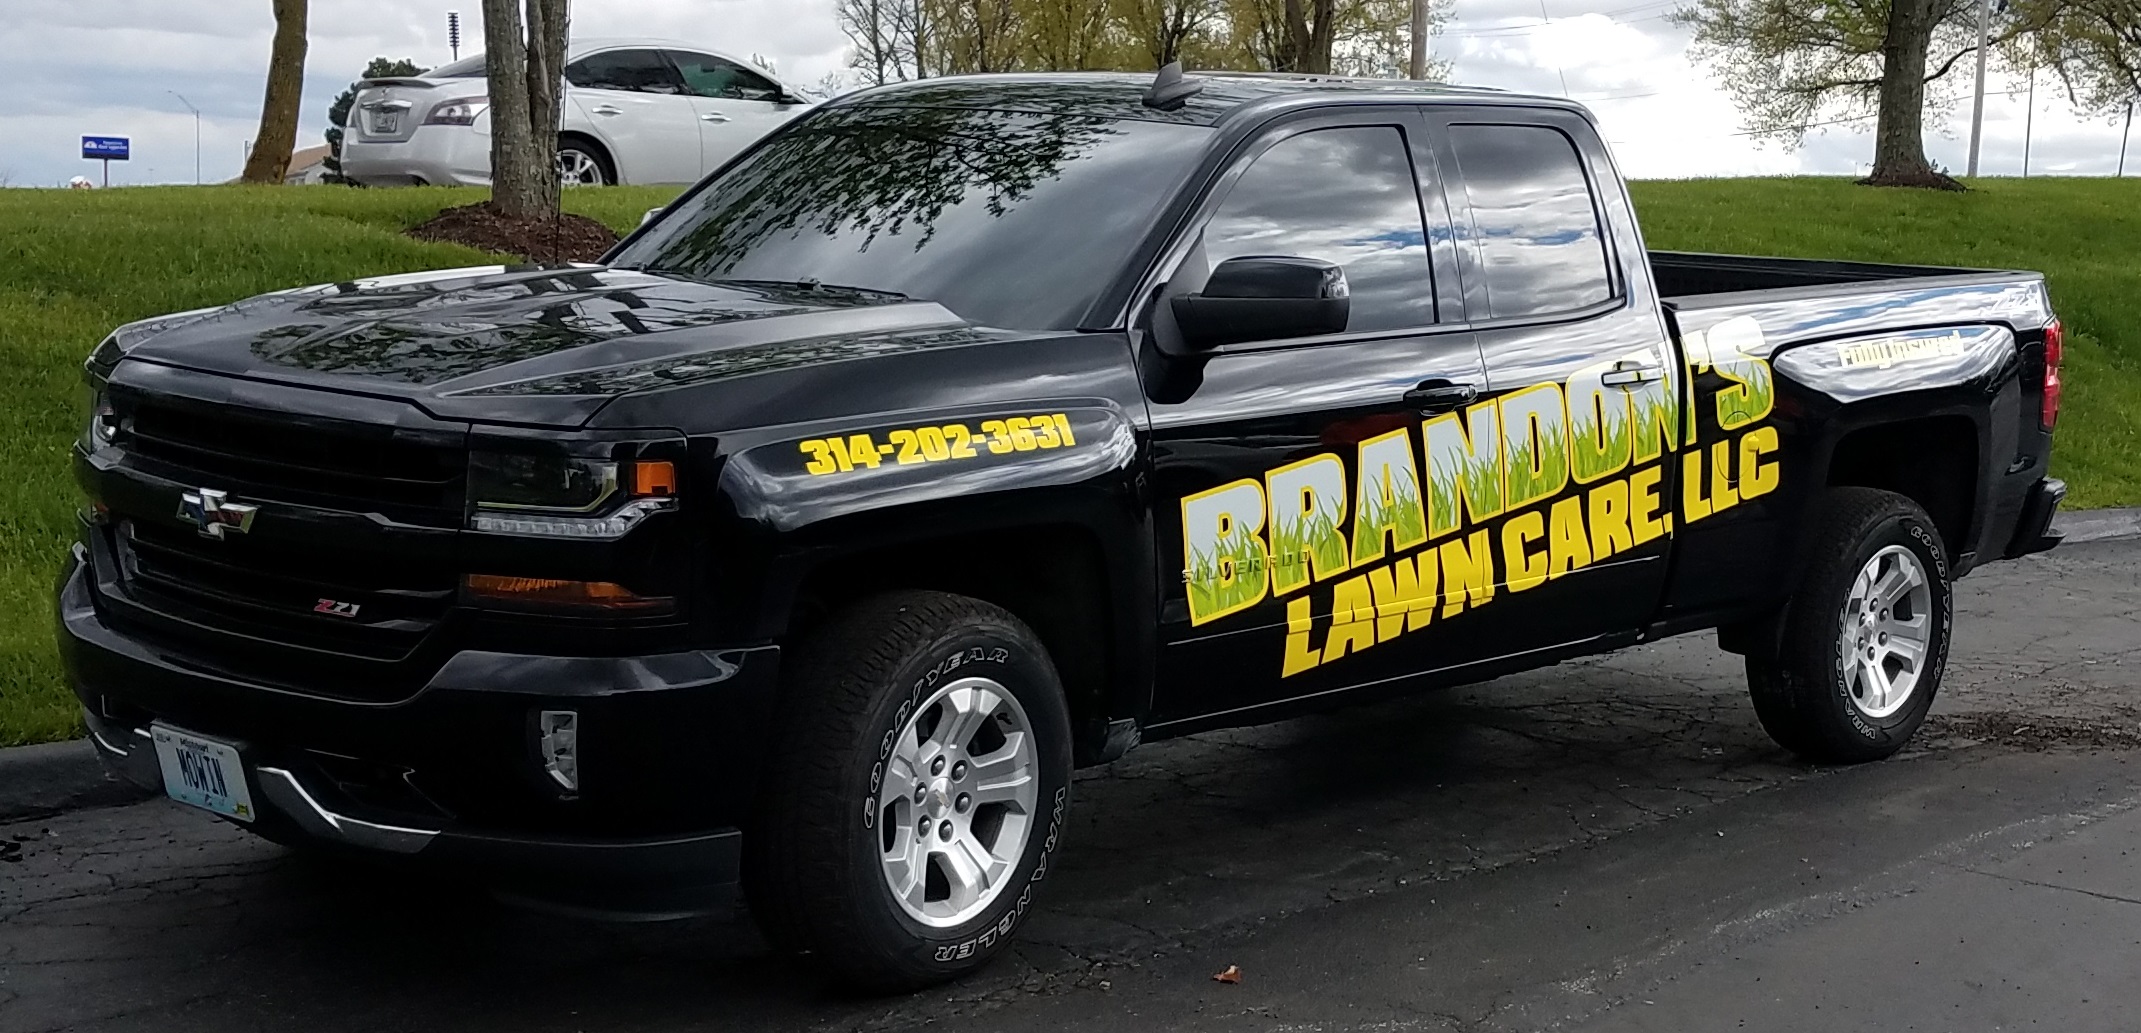 Brandon's Lawn Care vehicle wrap